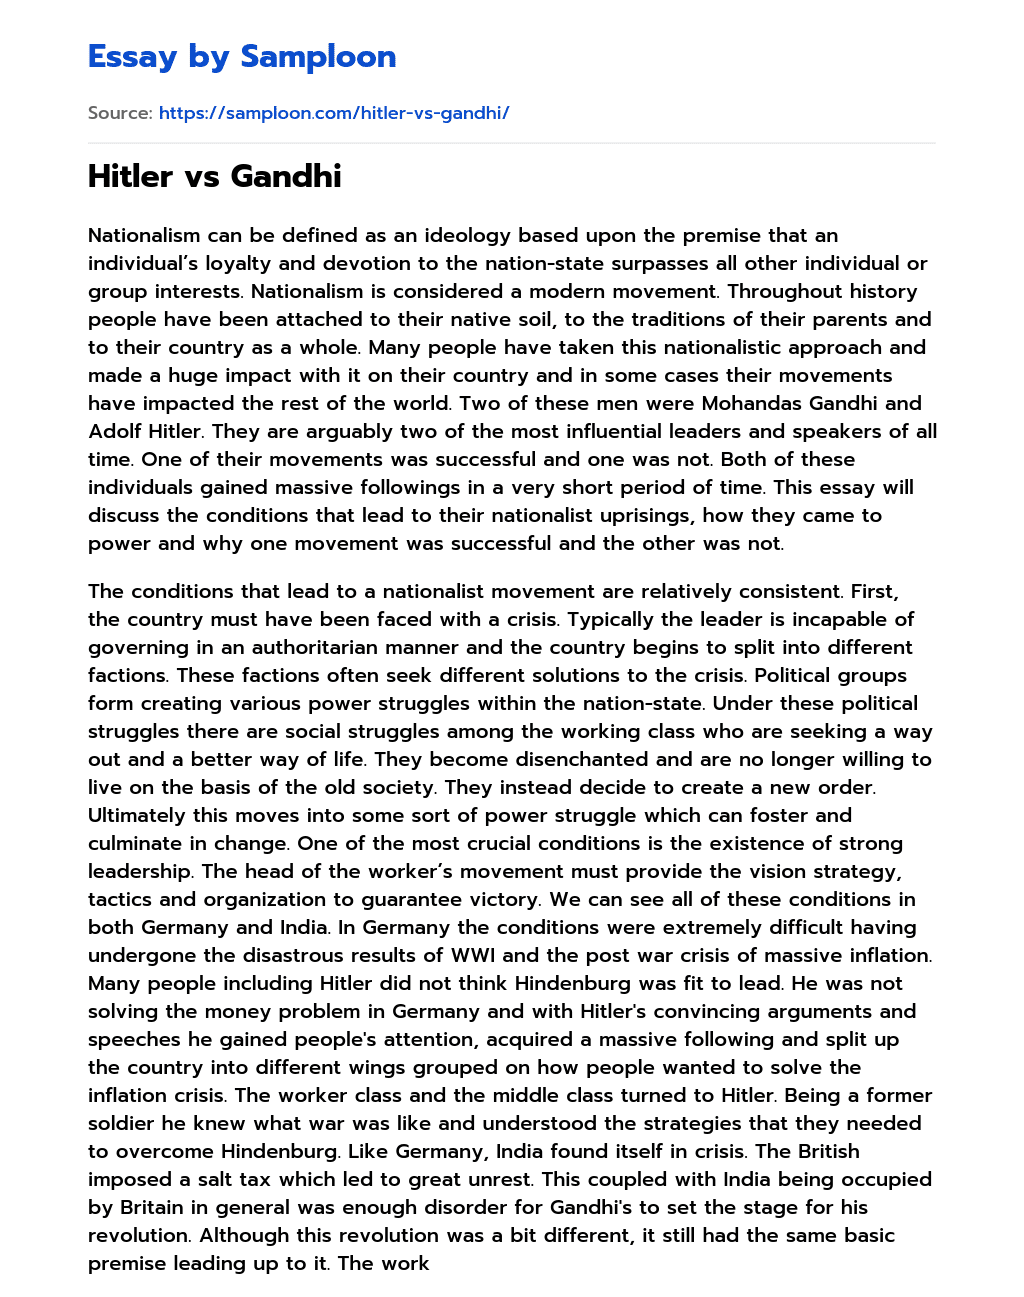 Hitler vs Gandhi essay